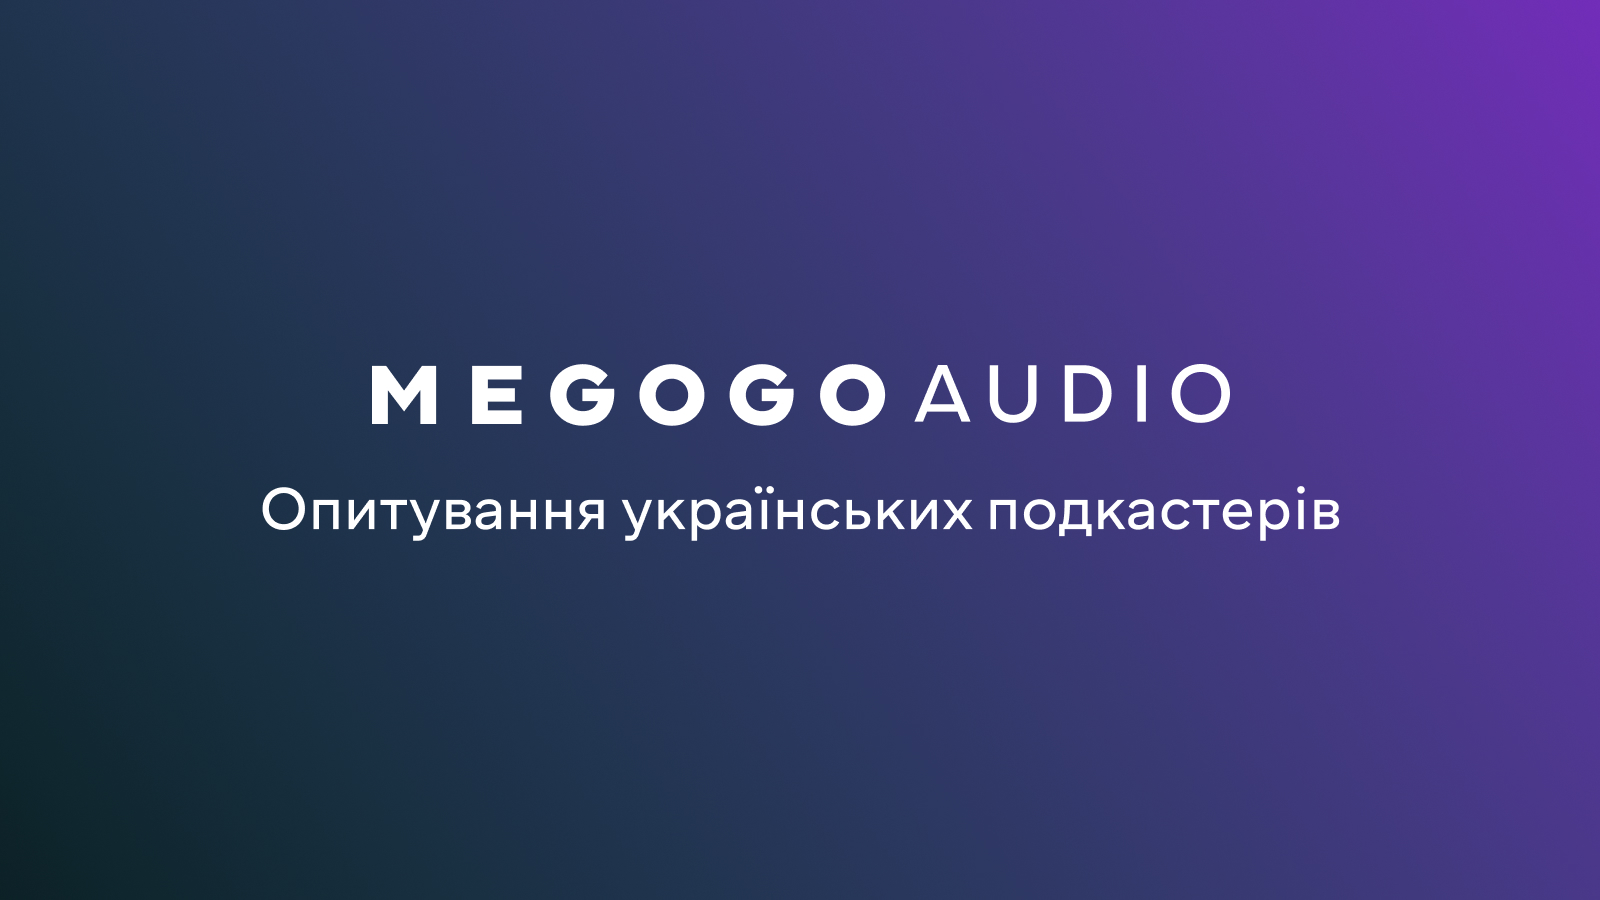 🎙 Портрет українського подкастера: долучайтесь до дослідження від MEGOGO AUDIO 